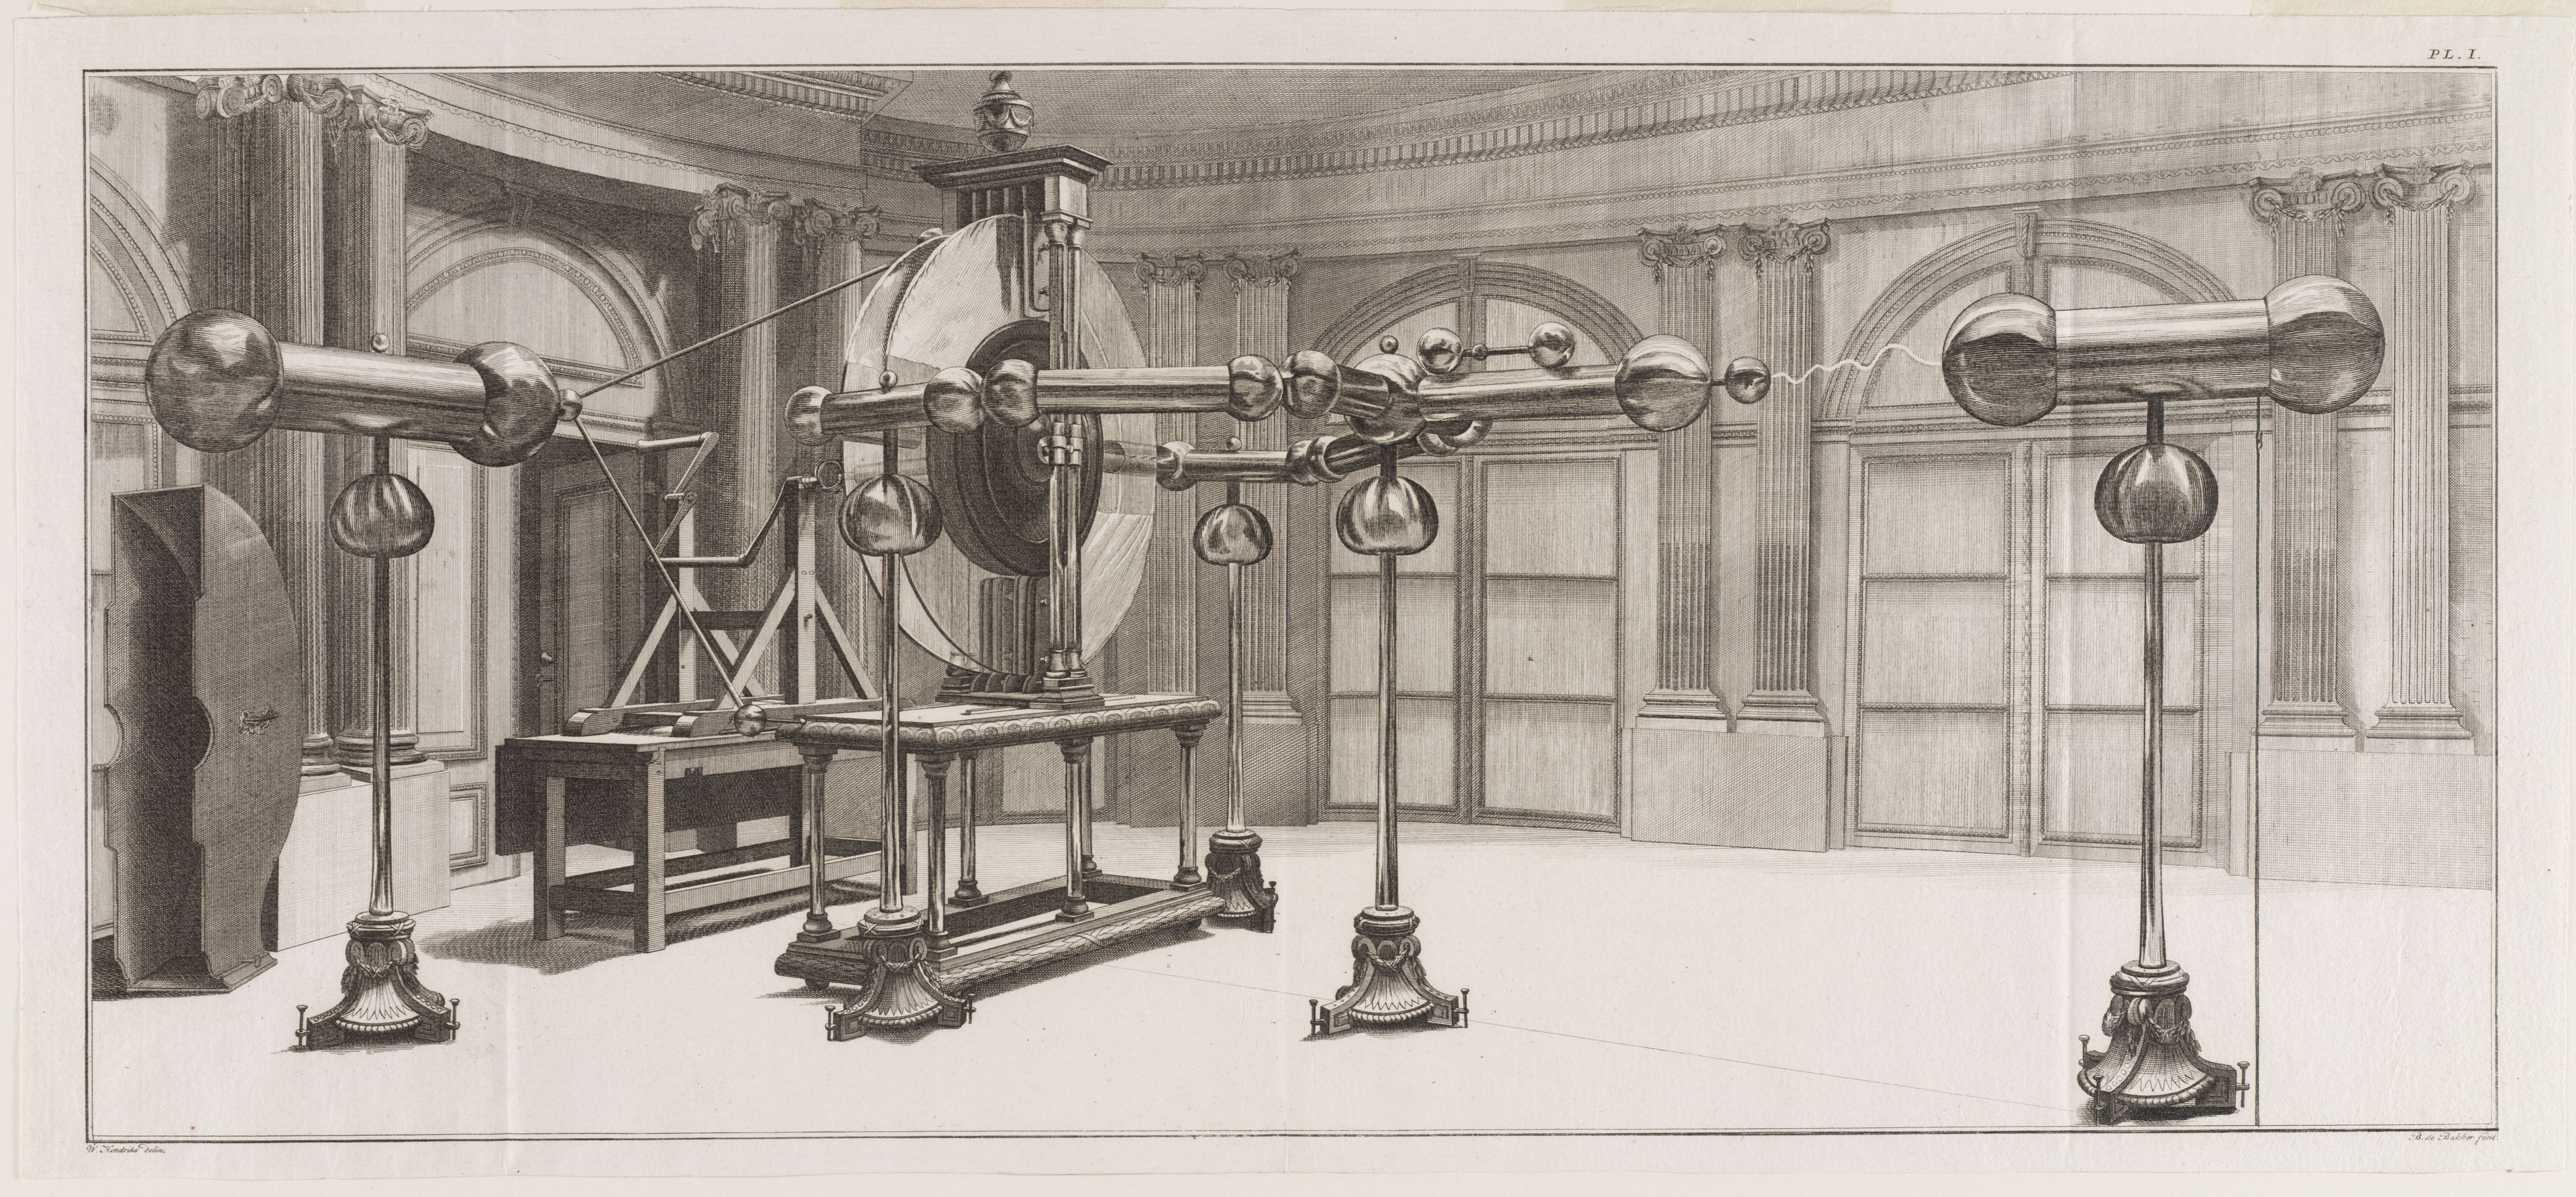 Barent de Bakker, Martinus van Marum's Large Electrostatic Generator in the Oval Room, 1800.